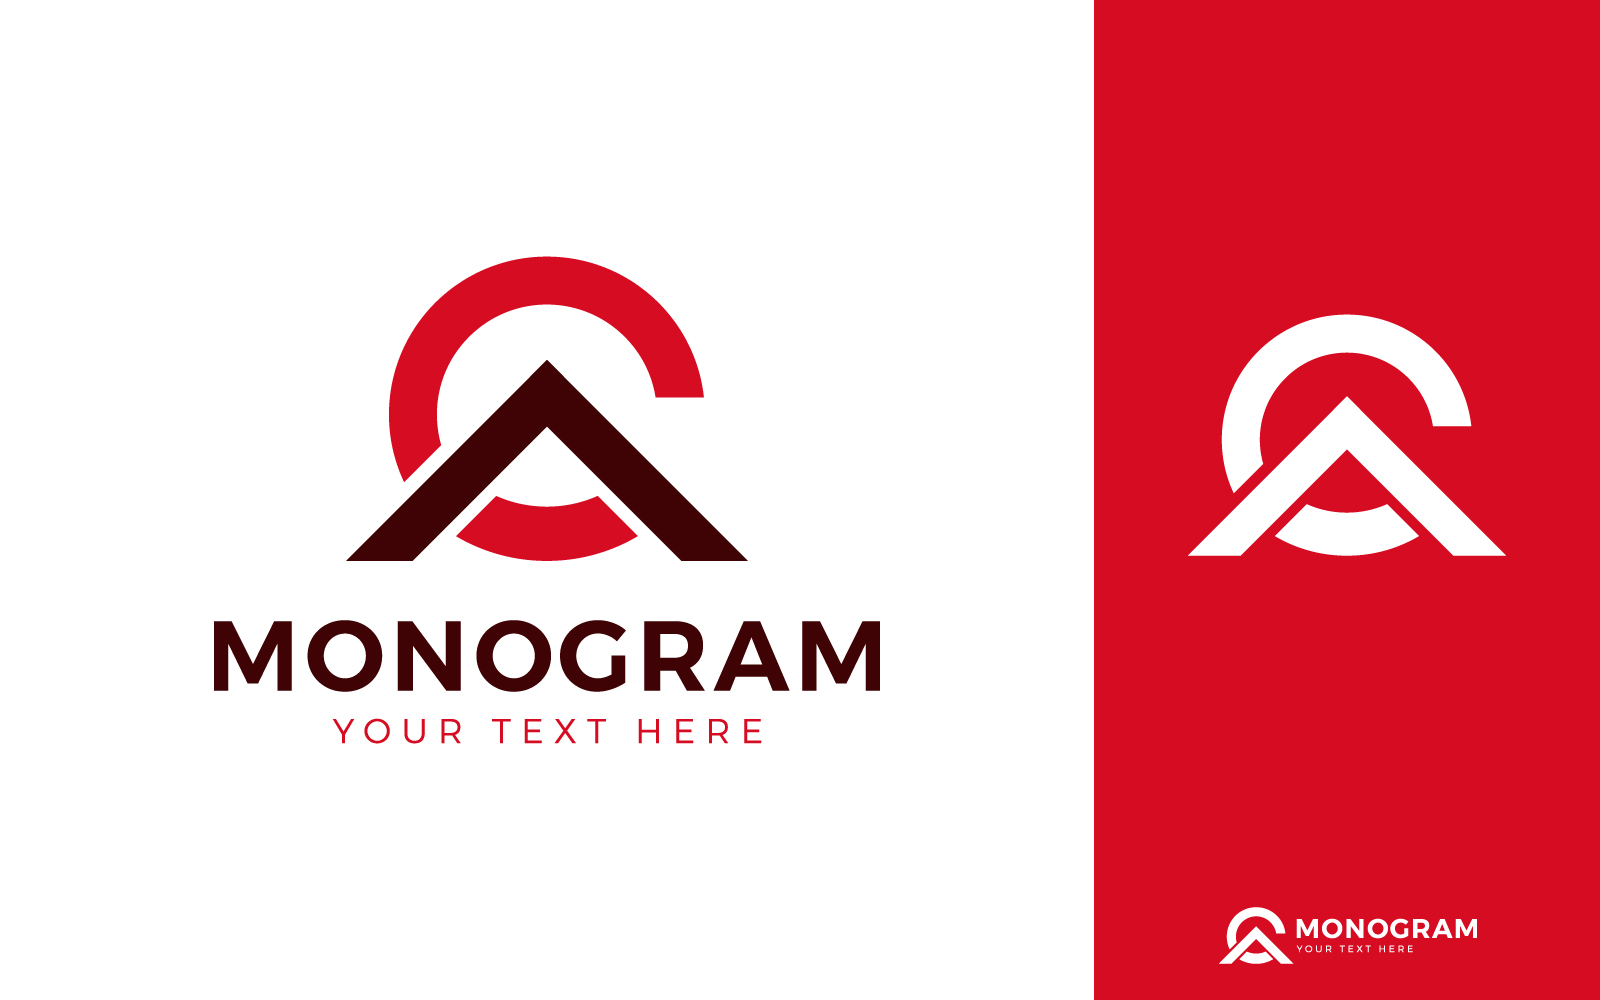 Vector Monogram CA logo design, monogram logo